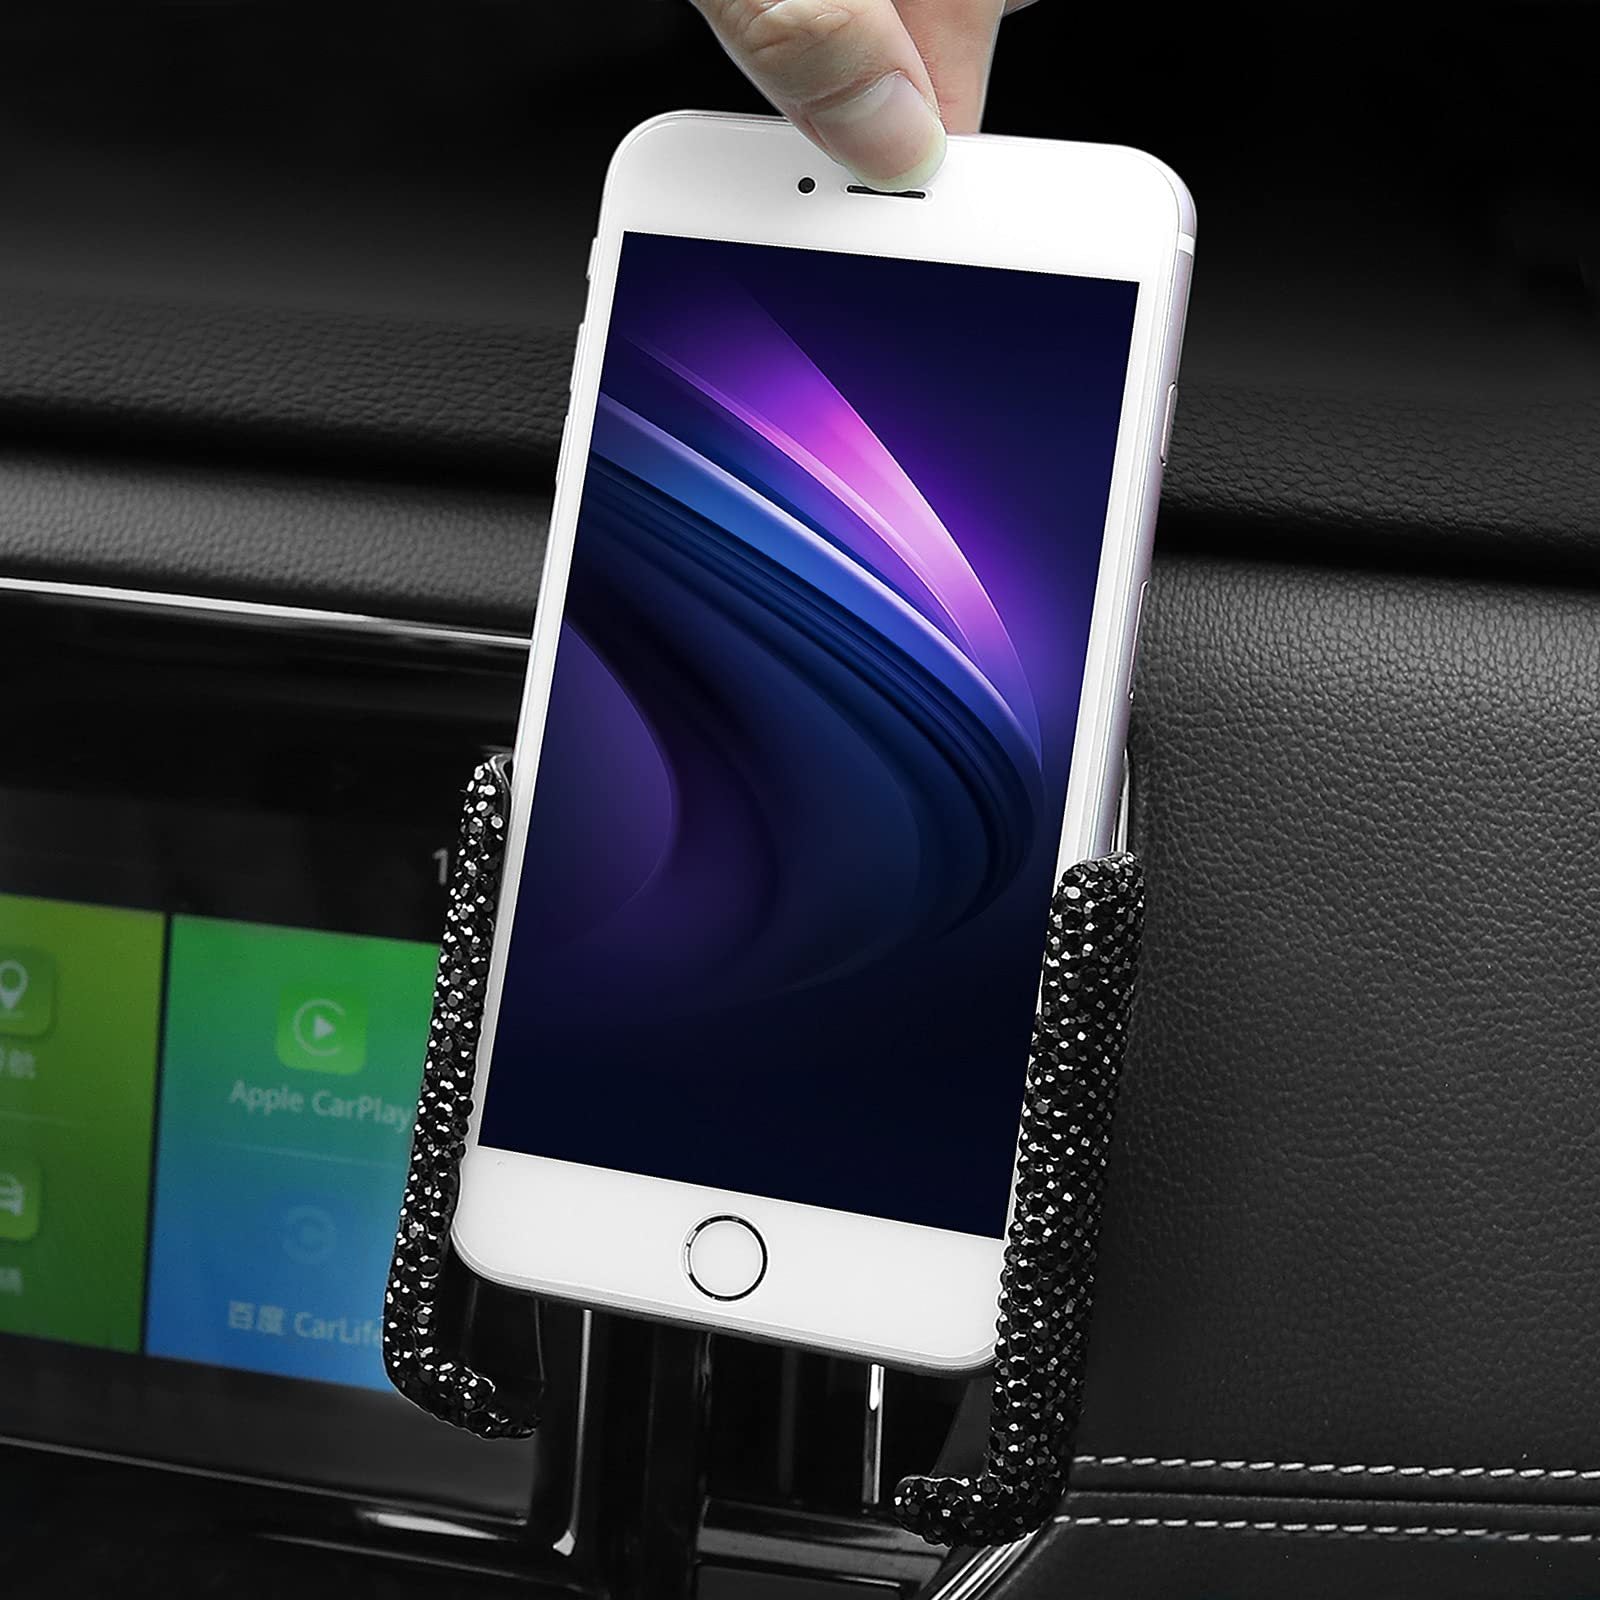 Frienda Bling Car Phone Holder Mini Car Air Vent Cellphone Mount